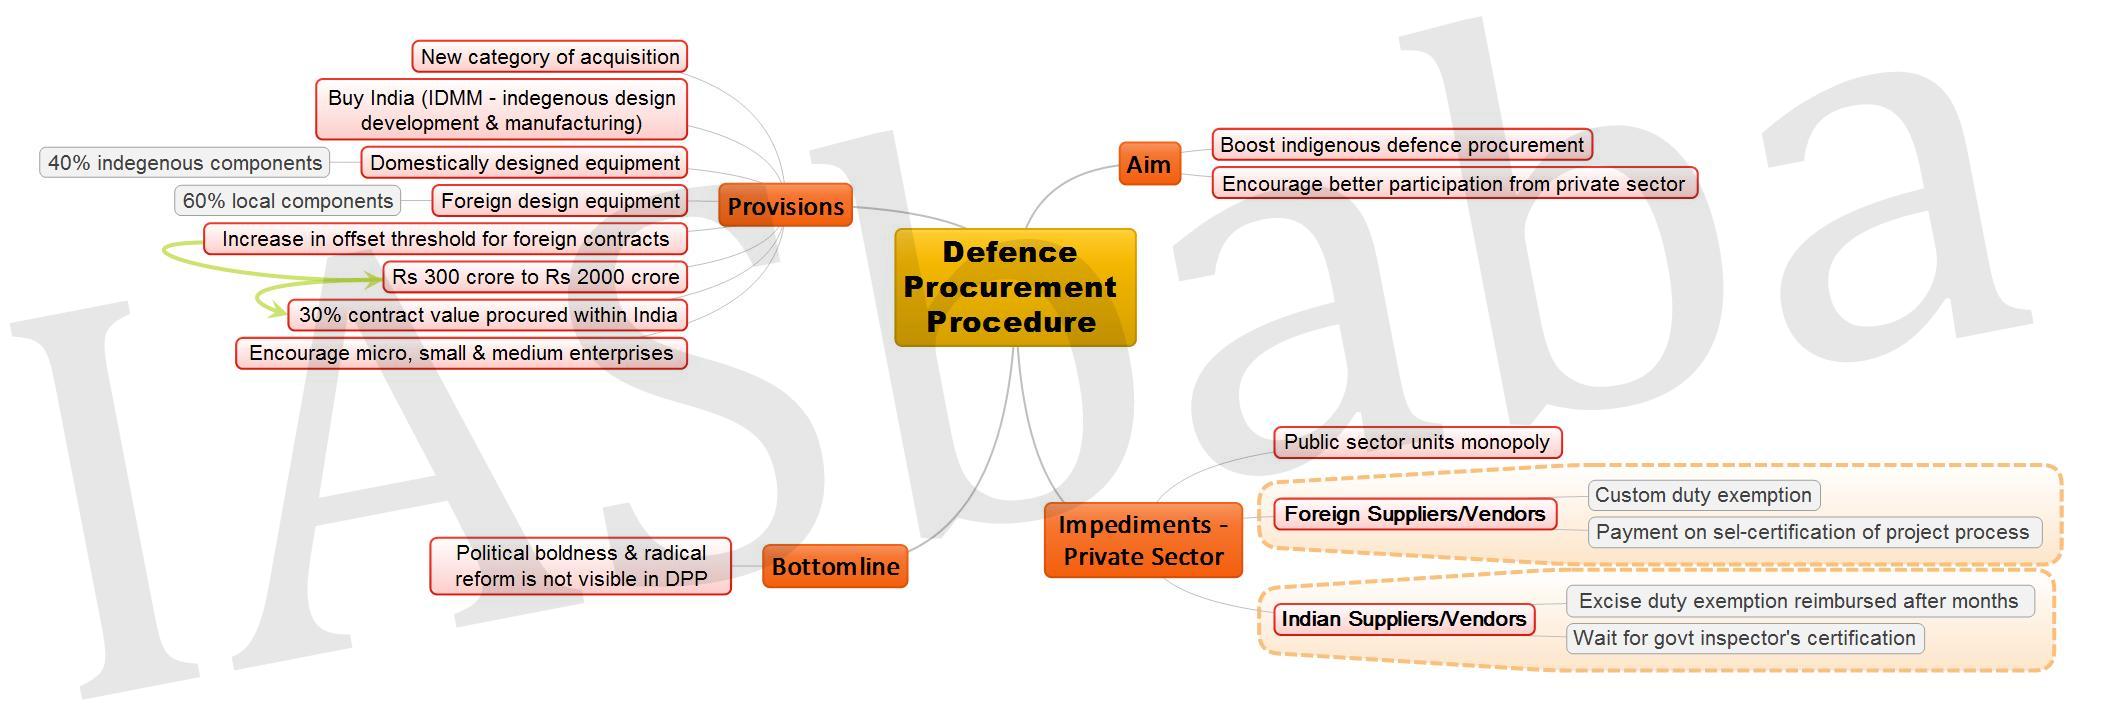 Defence Procurement Procedure JPEG